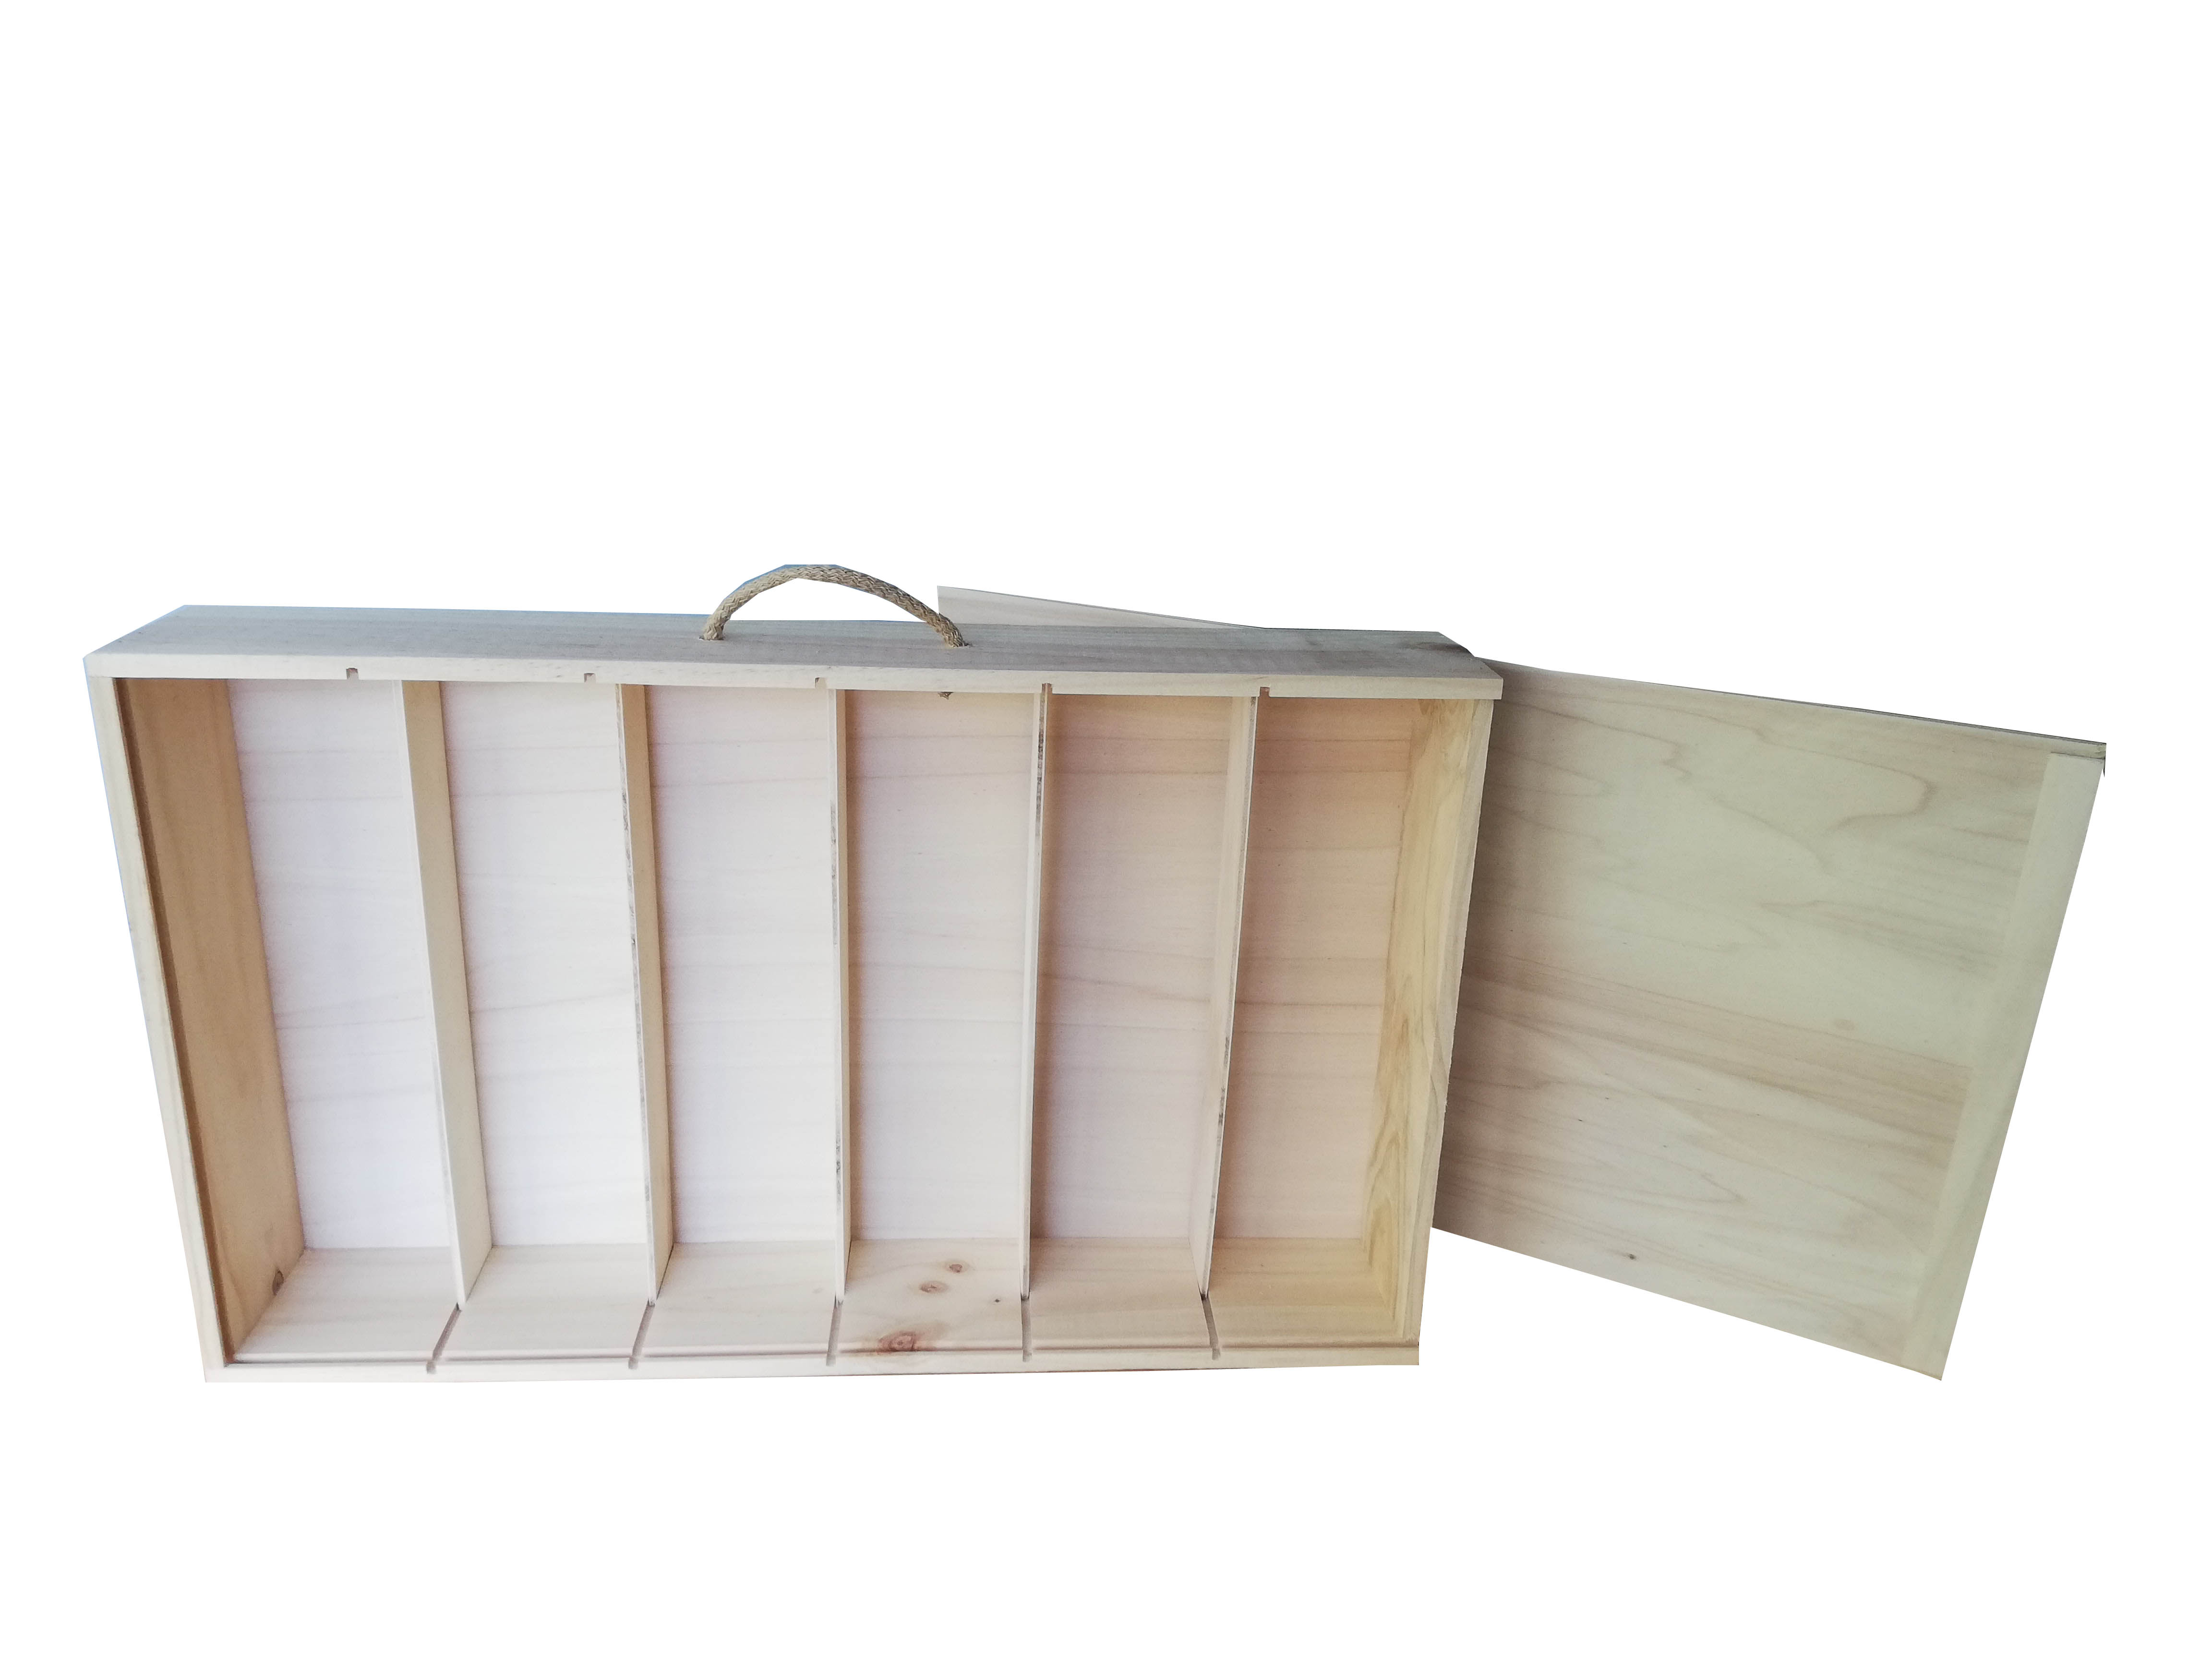 Caja de madera para 6 BOTELLAS de Cava/Vino con tapa corredera